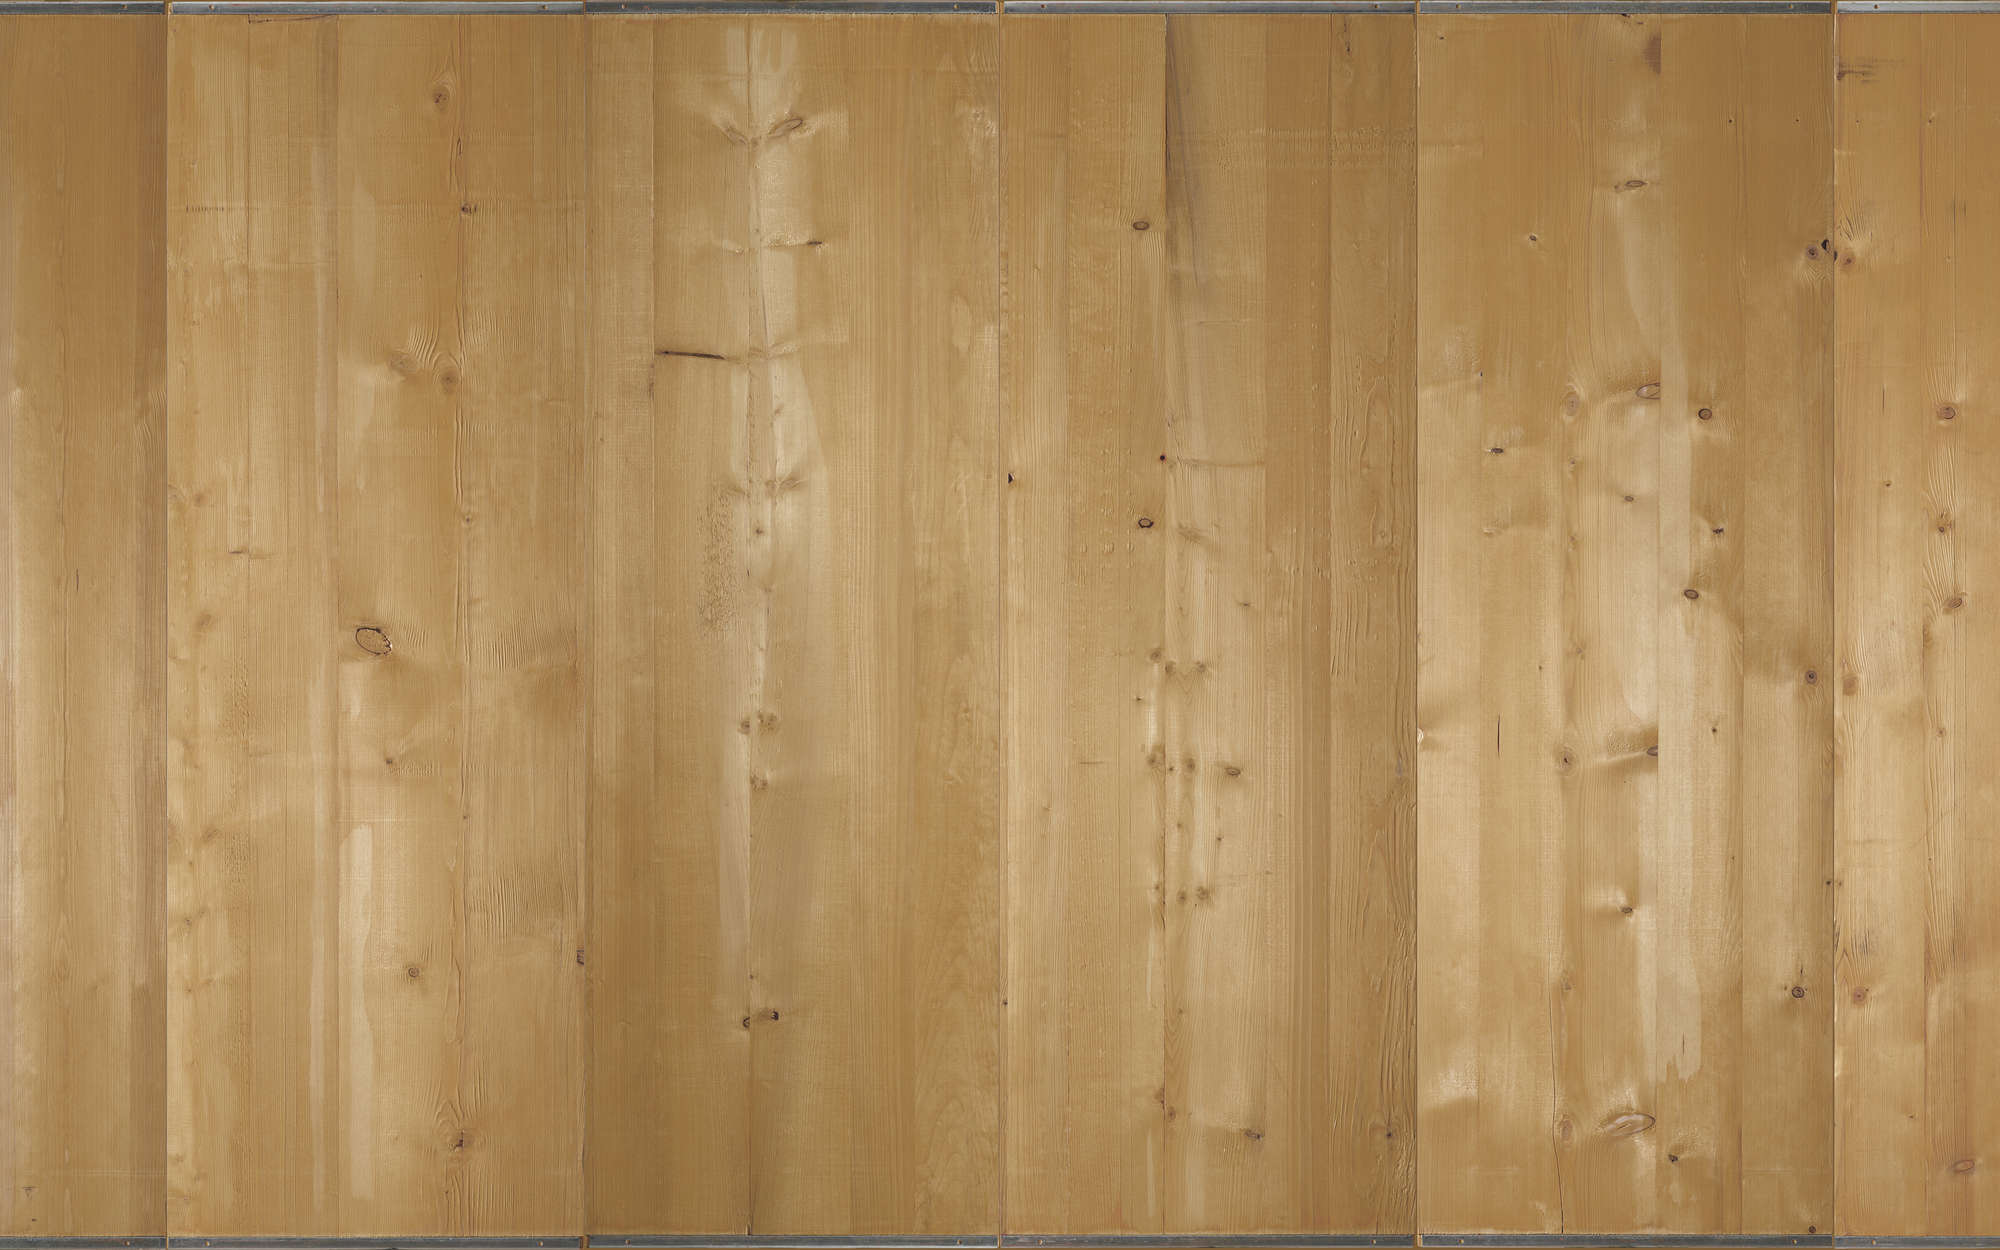             Photo wallpaper light wood planks - Textured non-woven
        